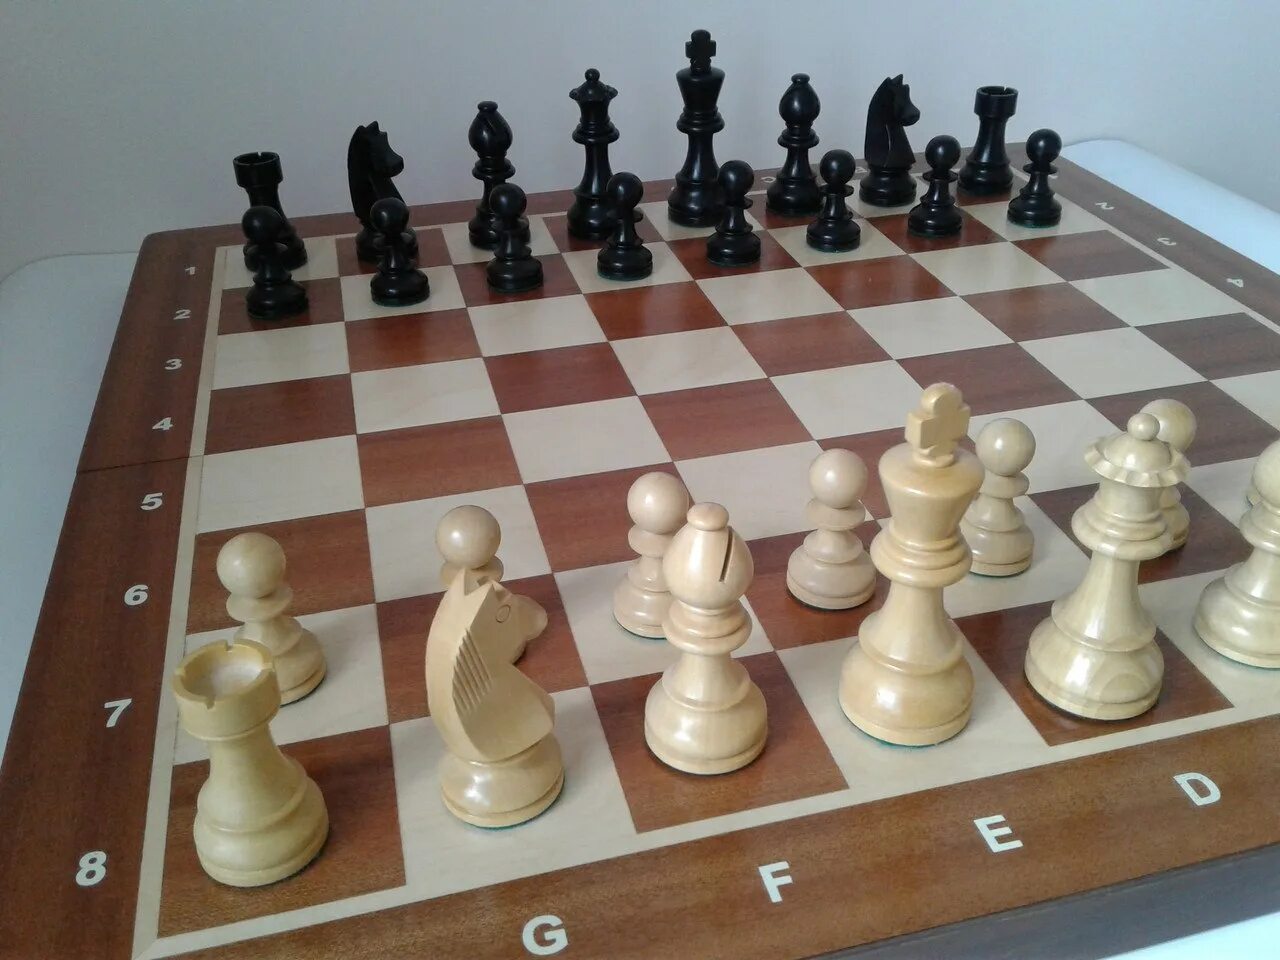 На шахматной доске 5 белых фигур. Расстановка шахмат. Правильная расстановка Шахма. Шахматы расстановка фигур. Расстановка шахматных фигур на доске.